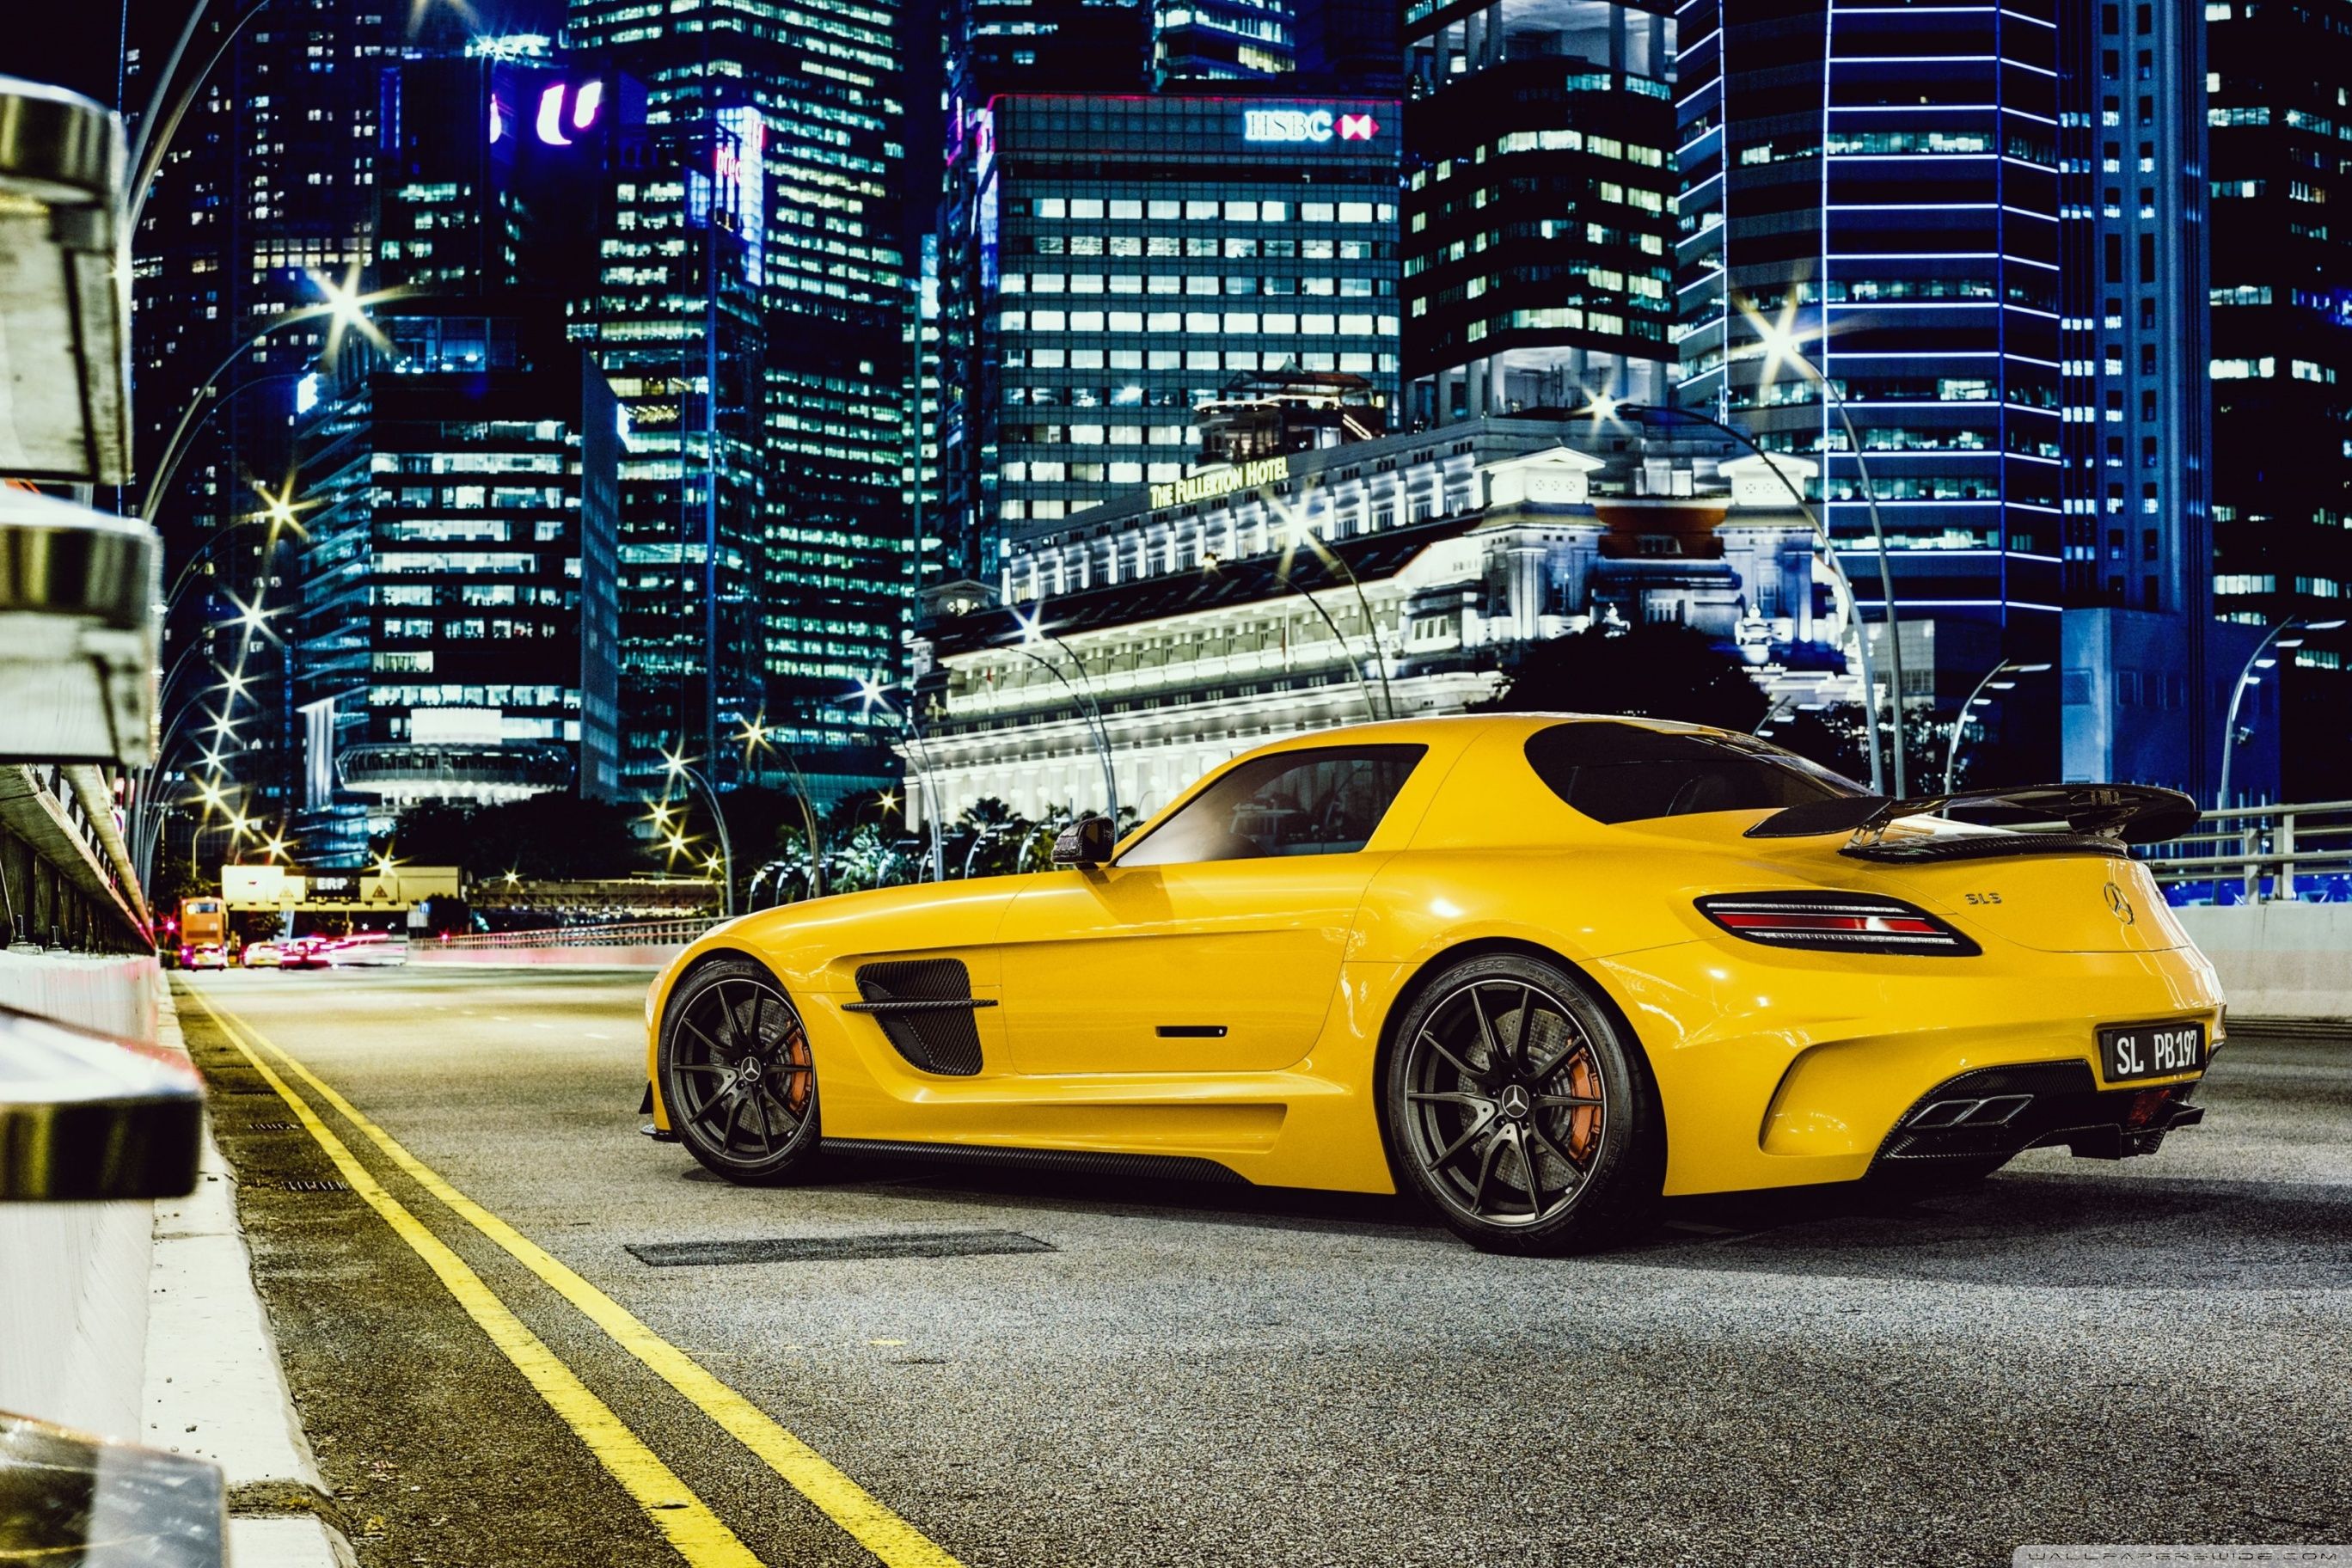 Mercedes Benz SLS AMG Yellow Car, City Night Ultra HD Desktop Background Wallpaper For, Widescreen & UltraWide Desktop & Laptop, Multi Display, Dual & Triple Monitor, Tablet